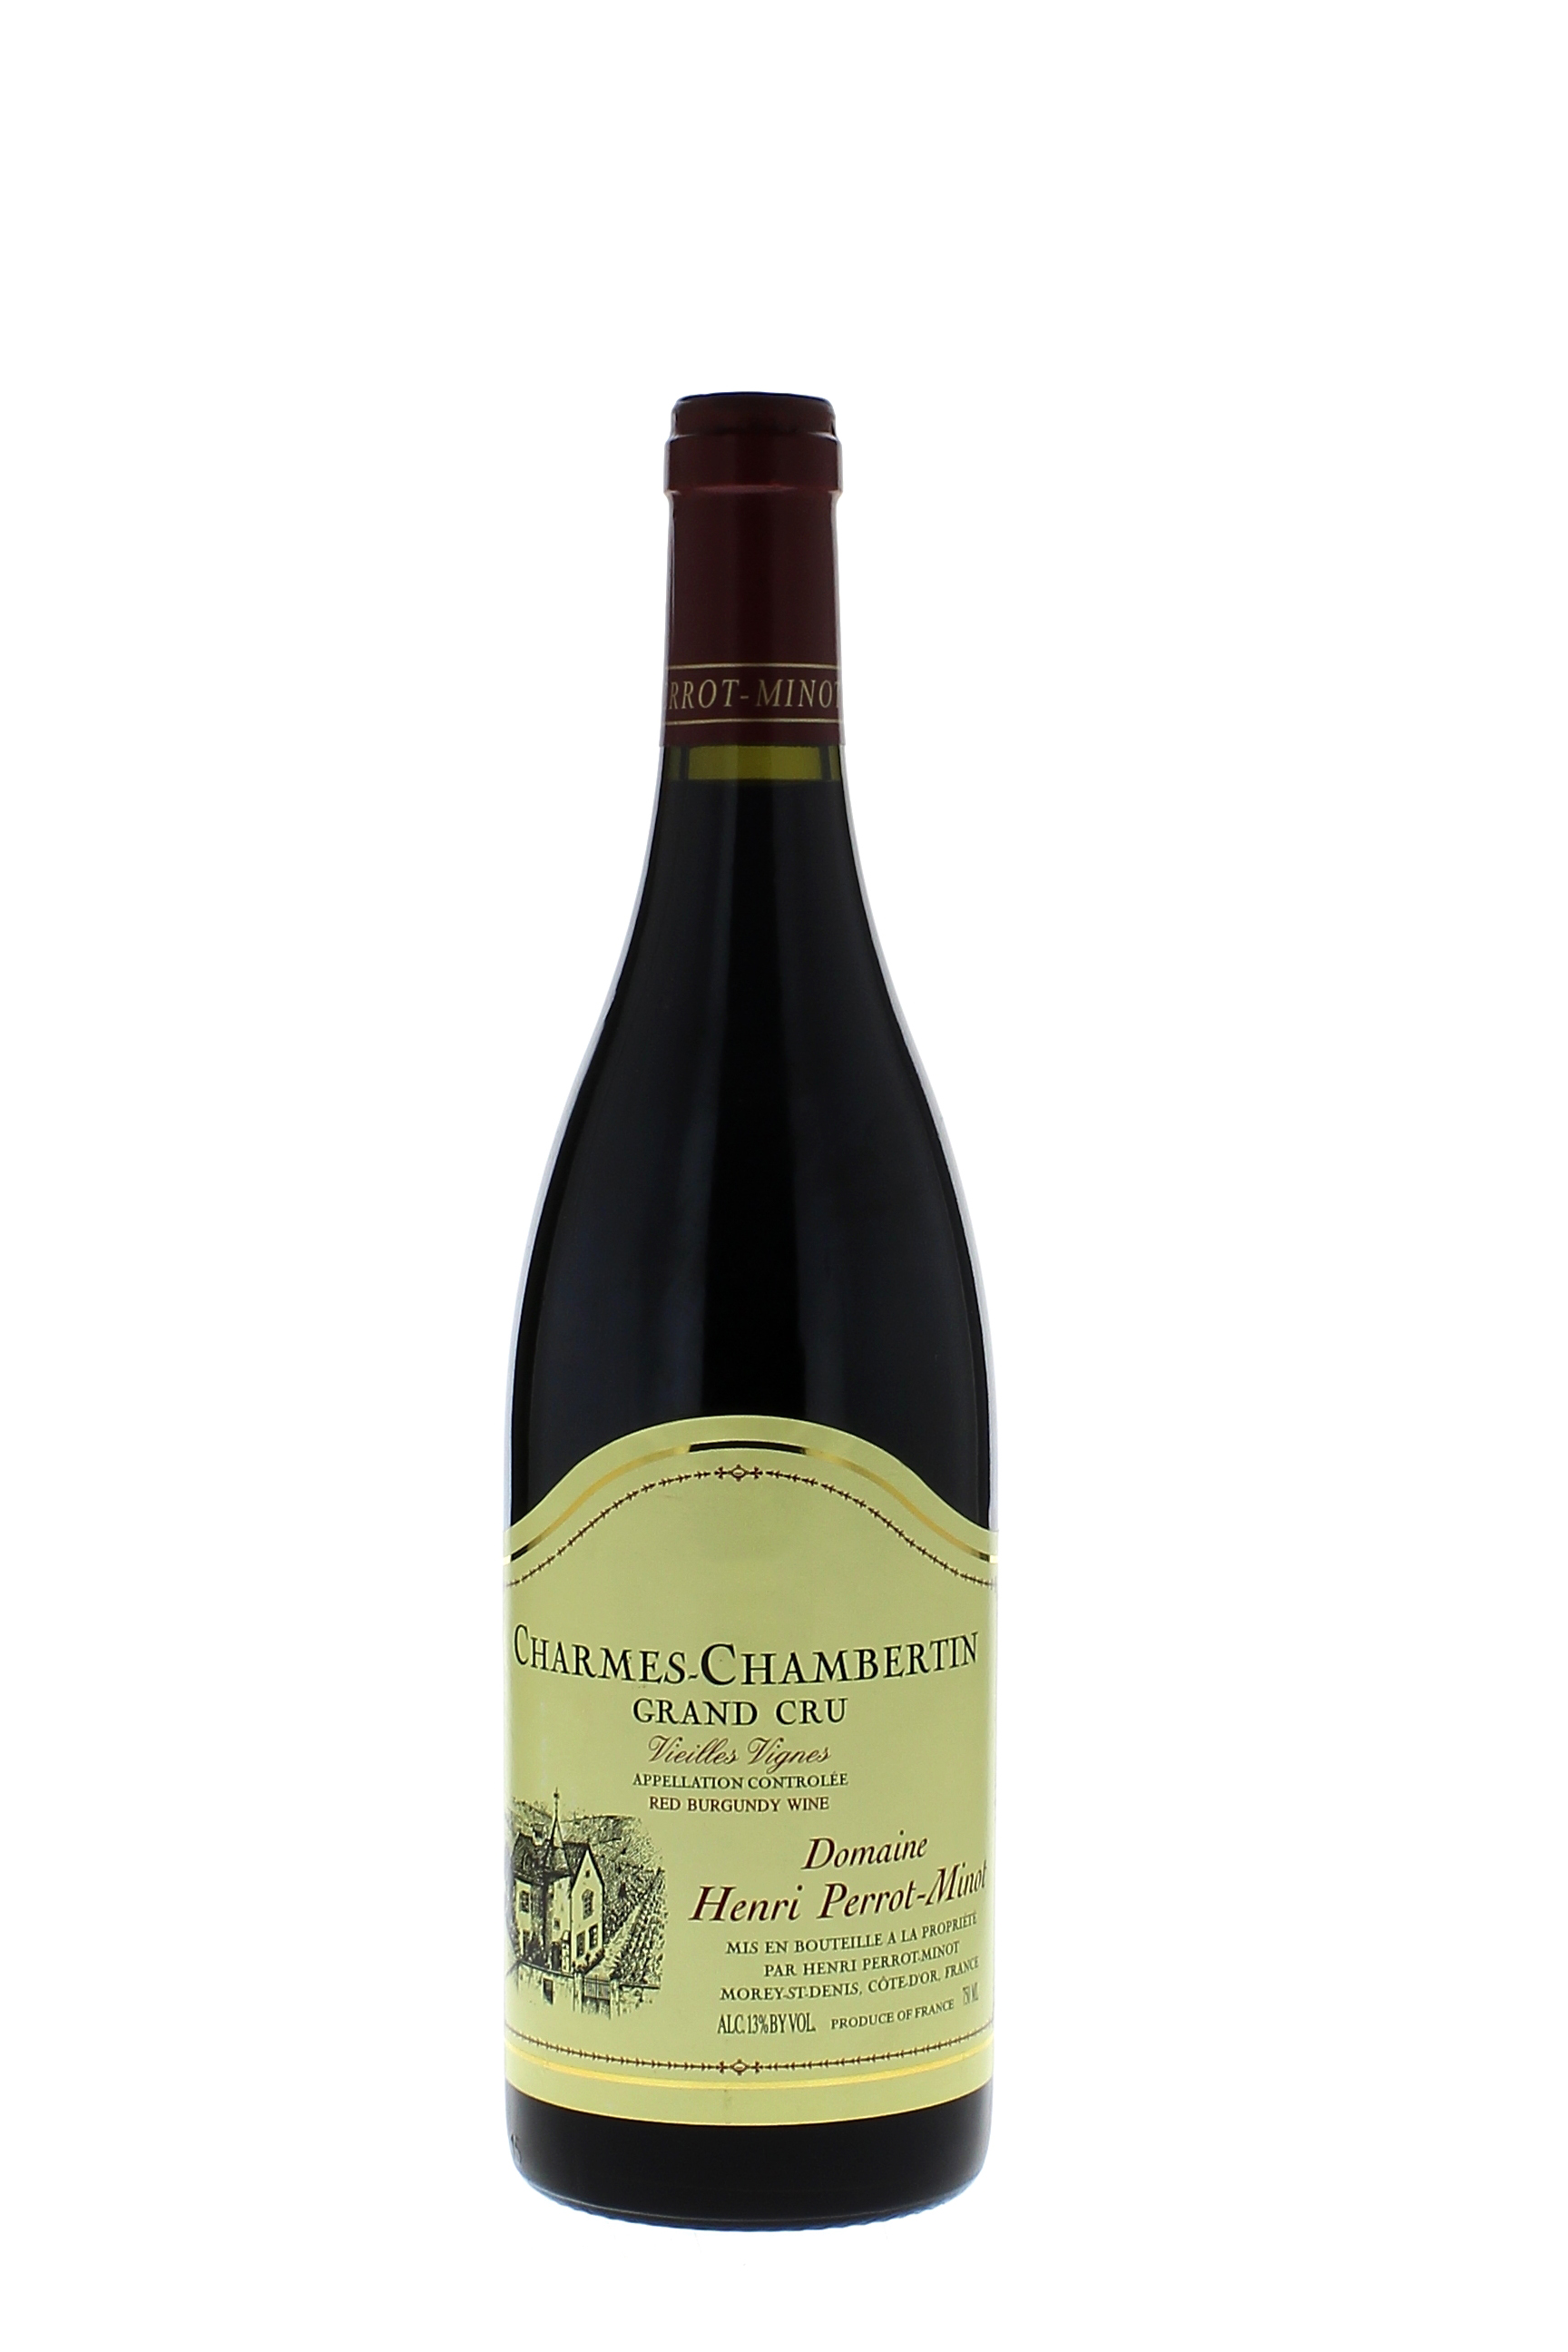 Charmes chambertin vieilles vignes grand cru 2007 Domaine PERROT MINOT, Bourgogne rouge